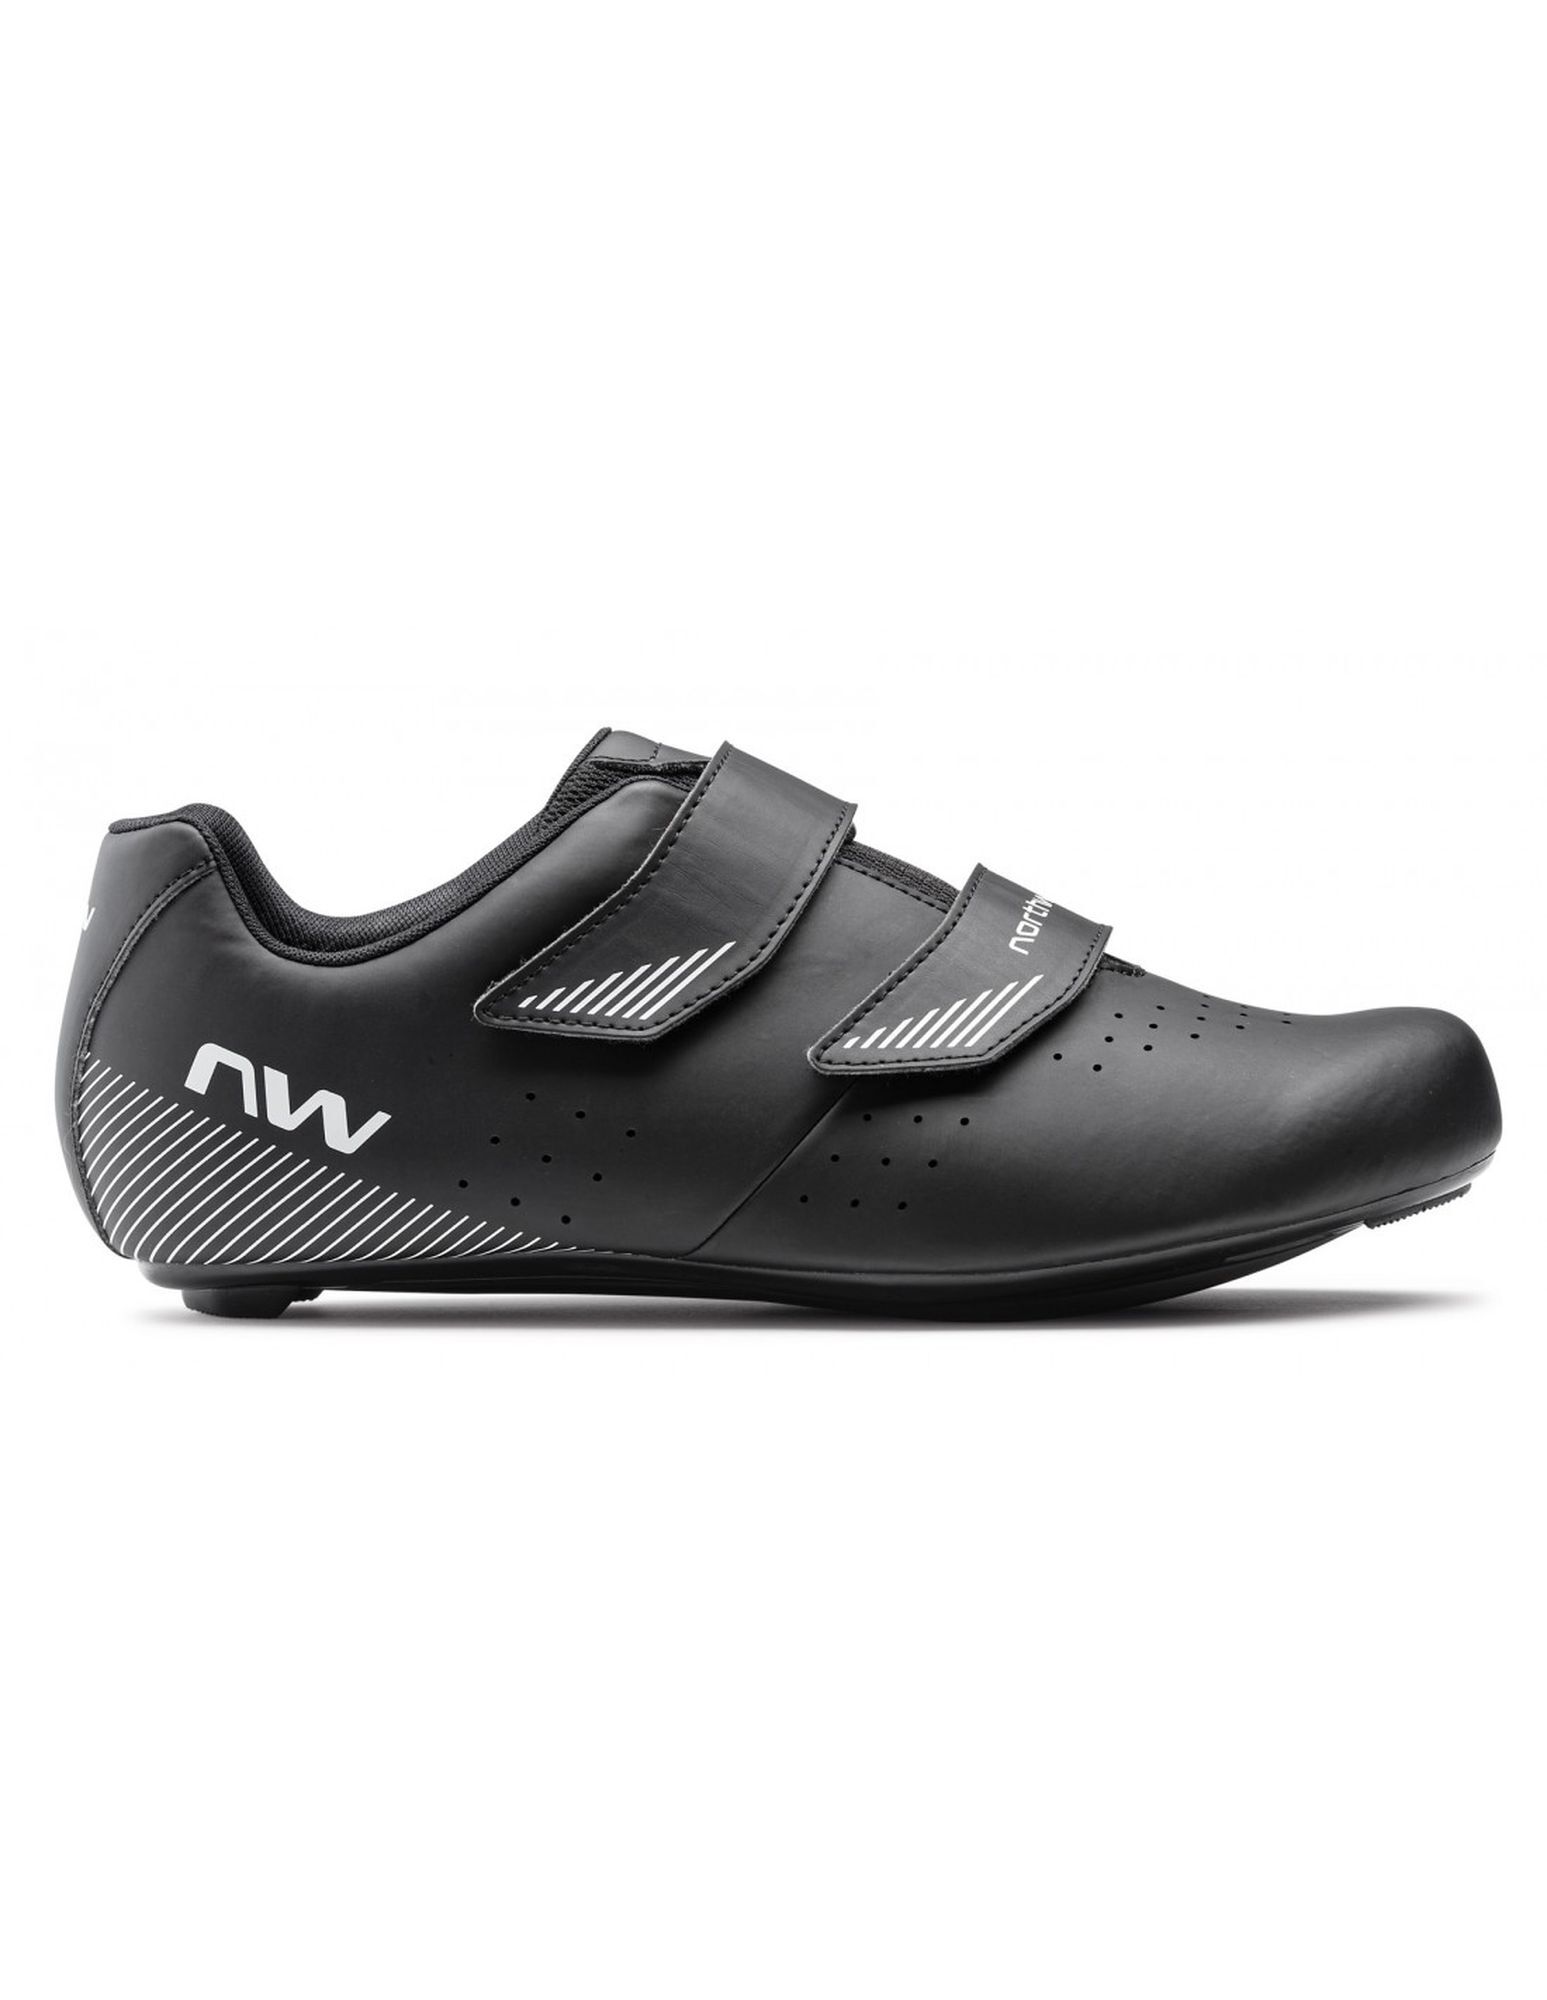 Northwave Jet 3 - Cycling shoes - Men's | Hardloop